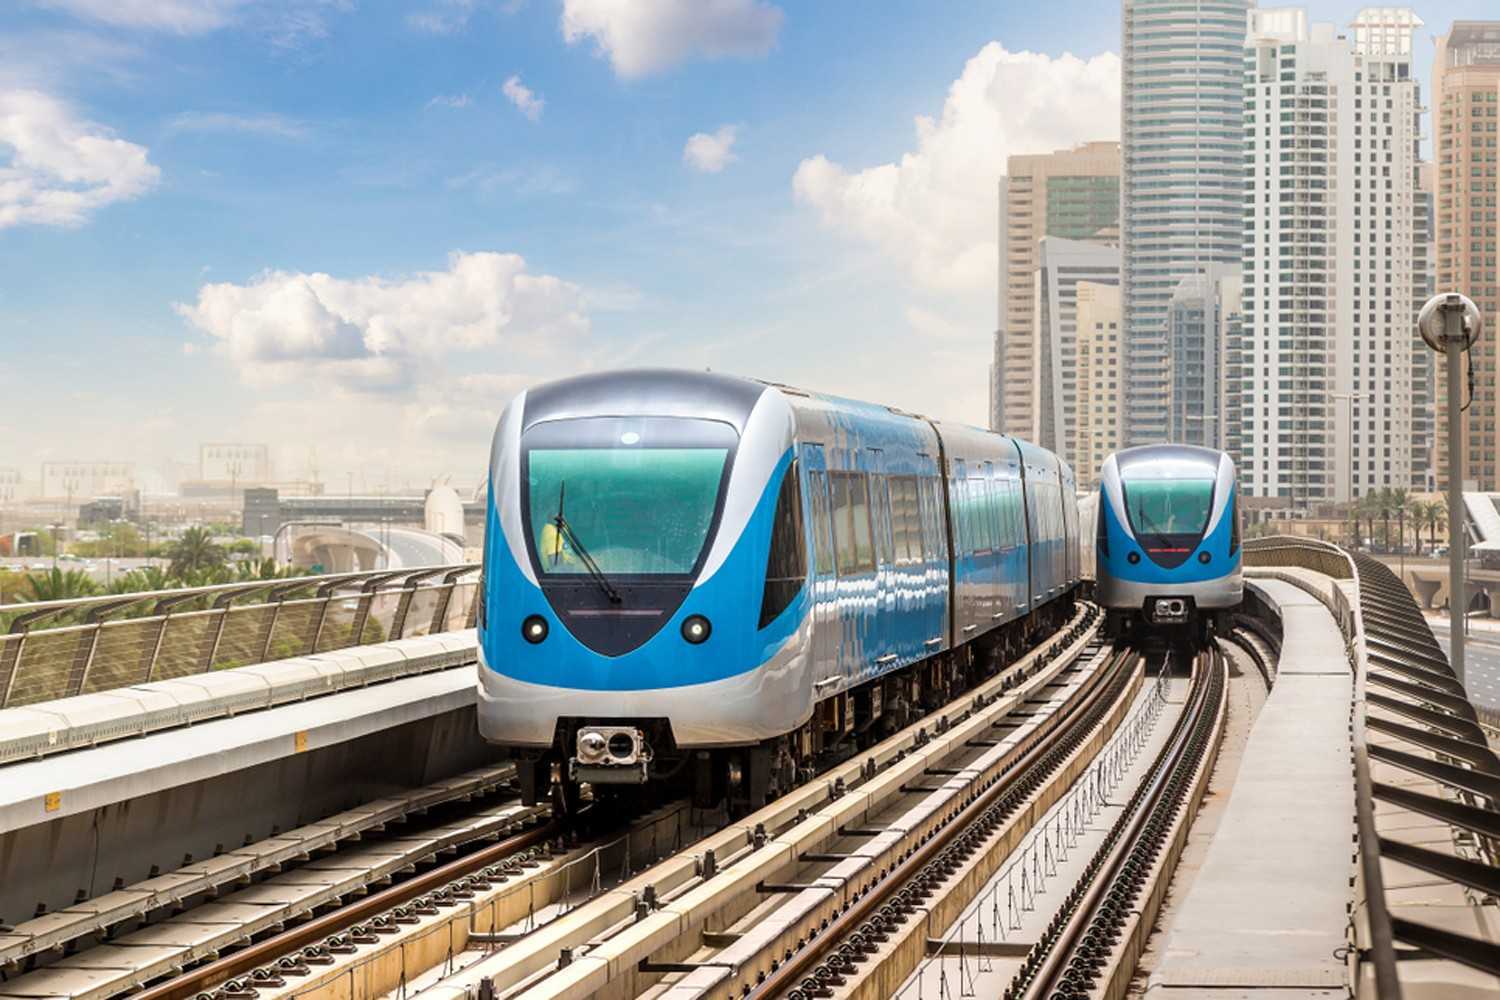 Visit Popular Tourist Attractions near The Dubai Metro